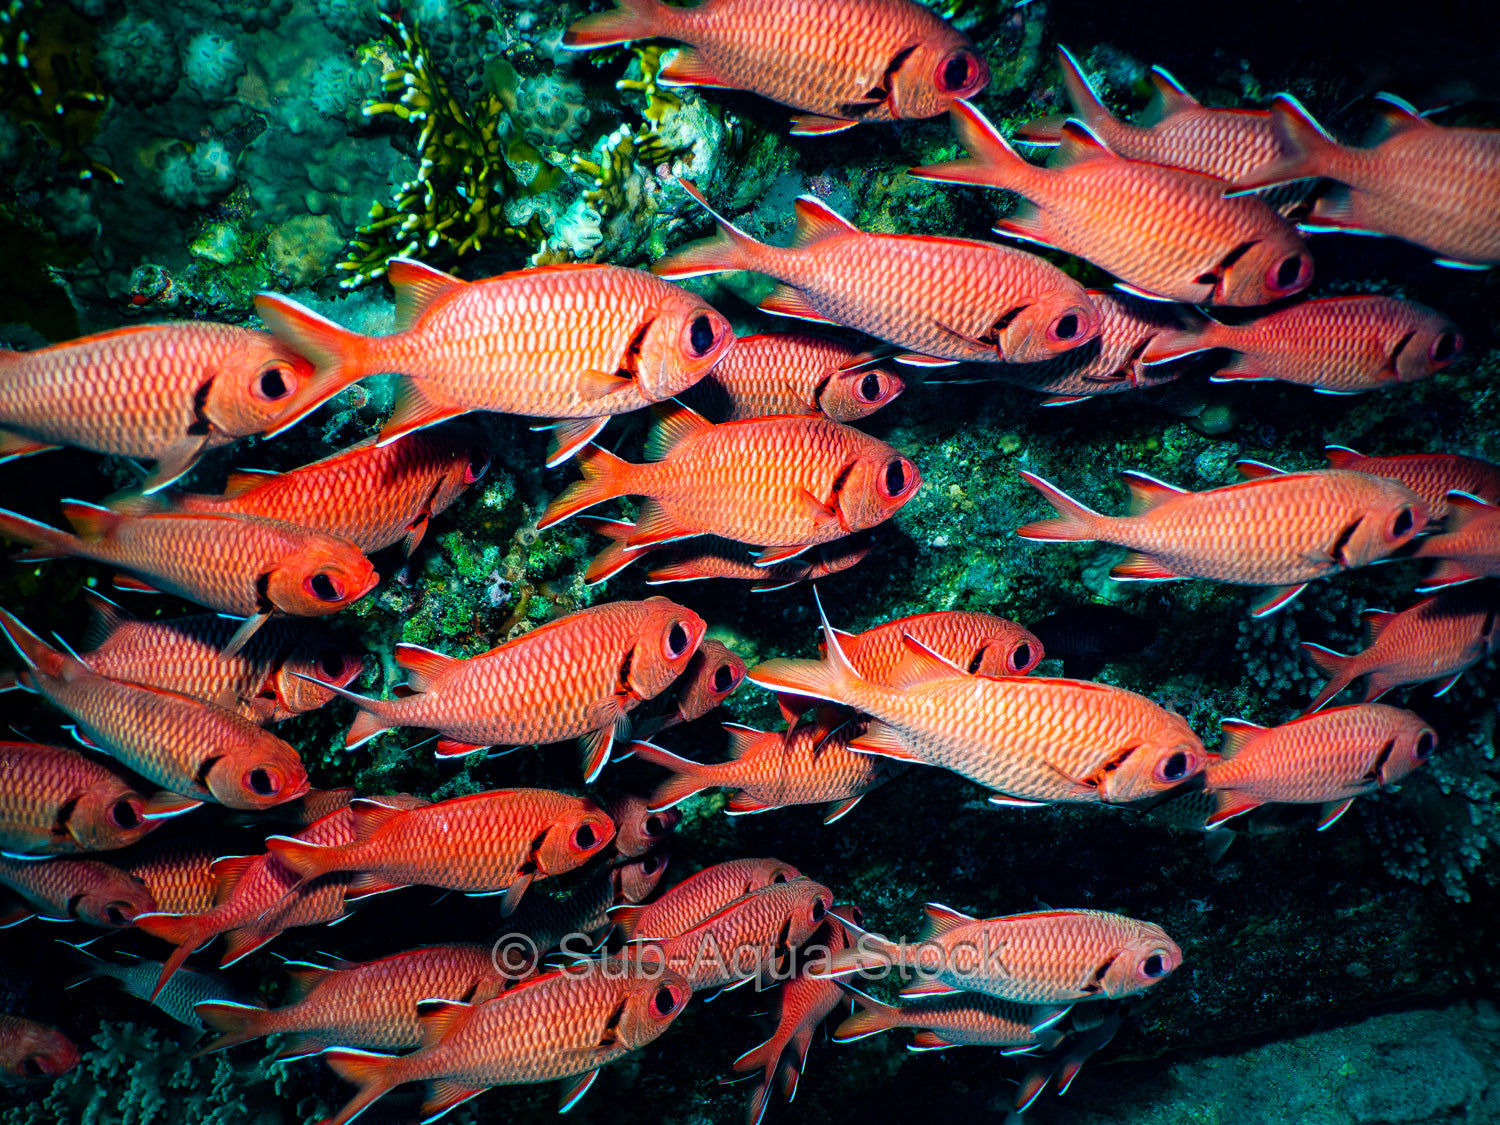 A school of red soldierfish (Myripristis murdjan) sheltering beneath a wreck.